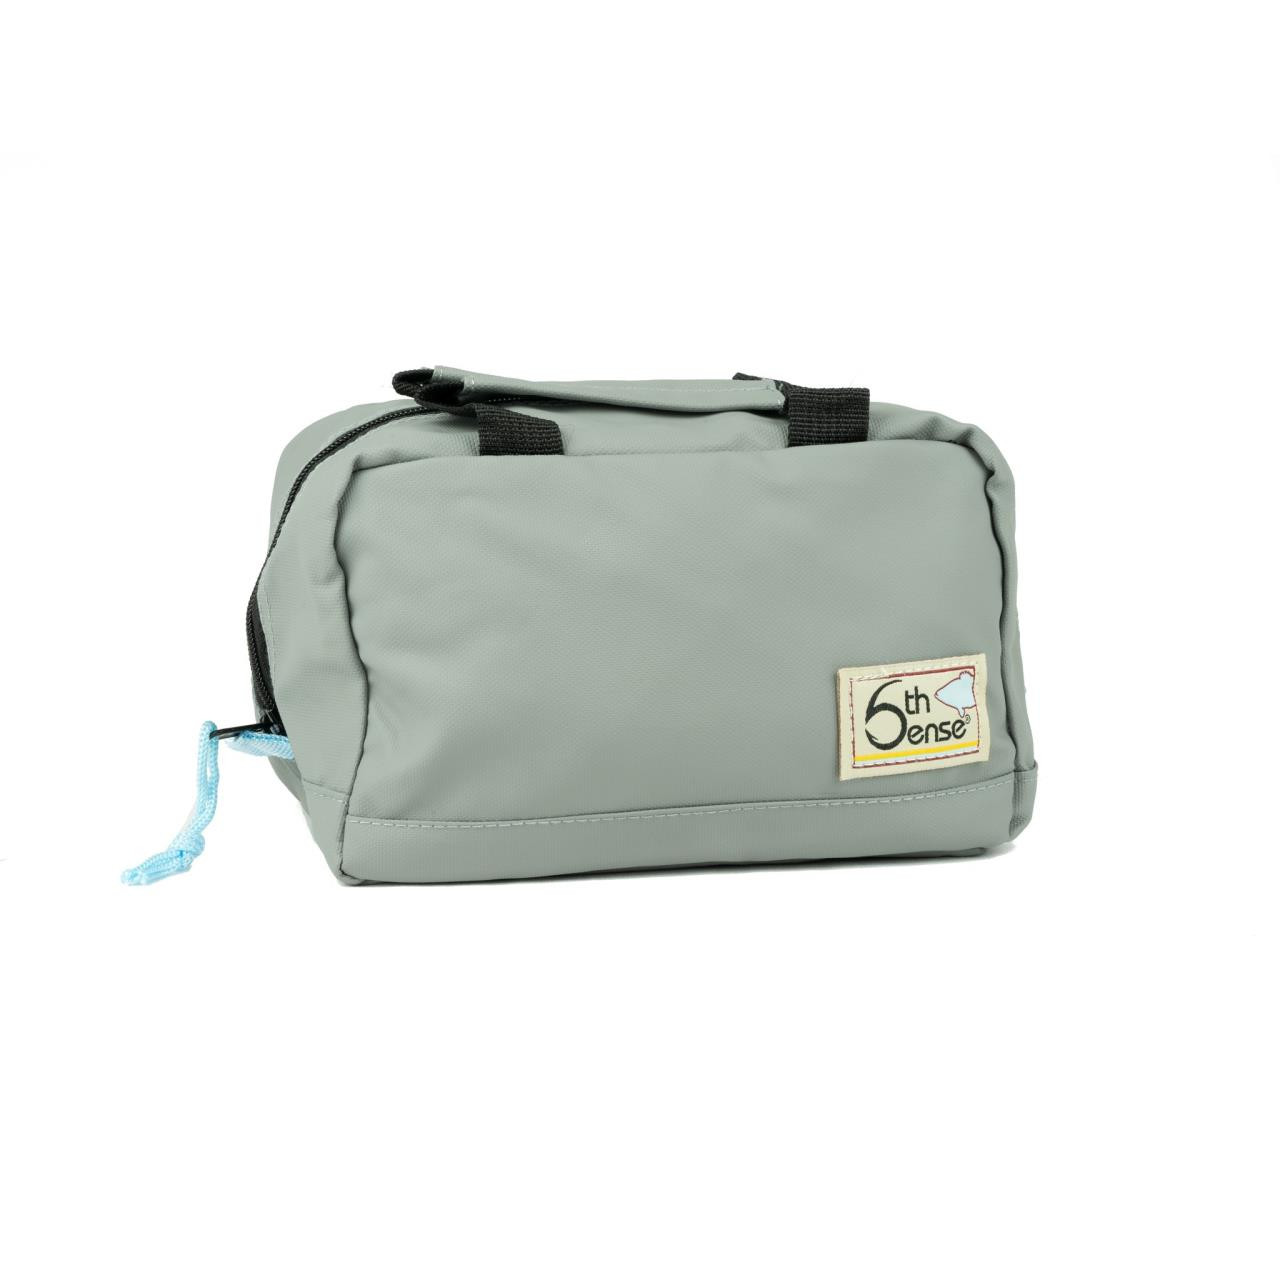 6th Sense Bait Bag - Large - Gray - Dance's Sporting Goods